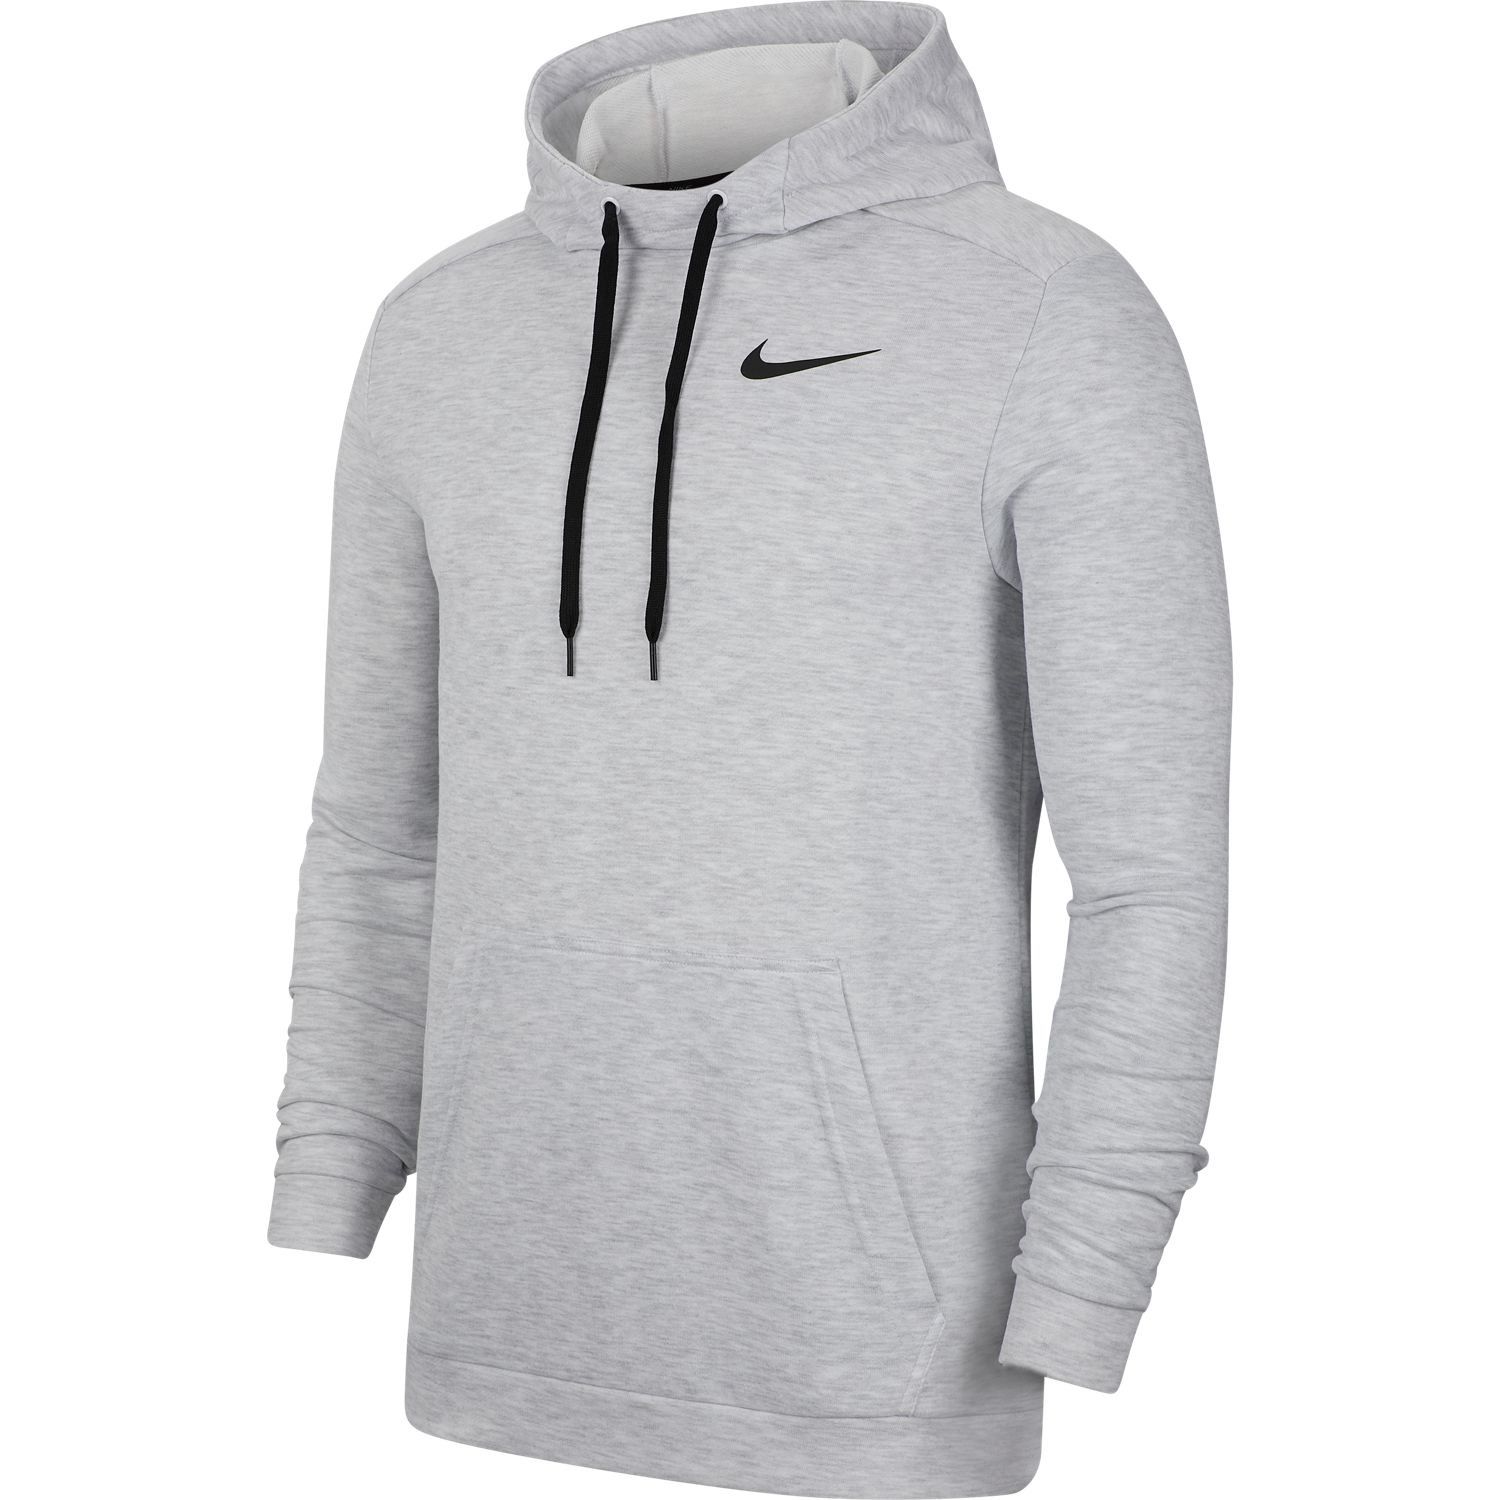 Men's Nike Dri-FIT Pullover Training Hoodie